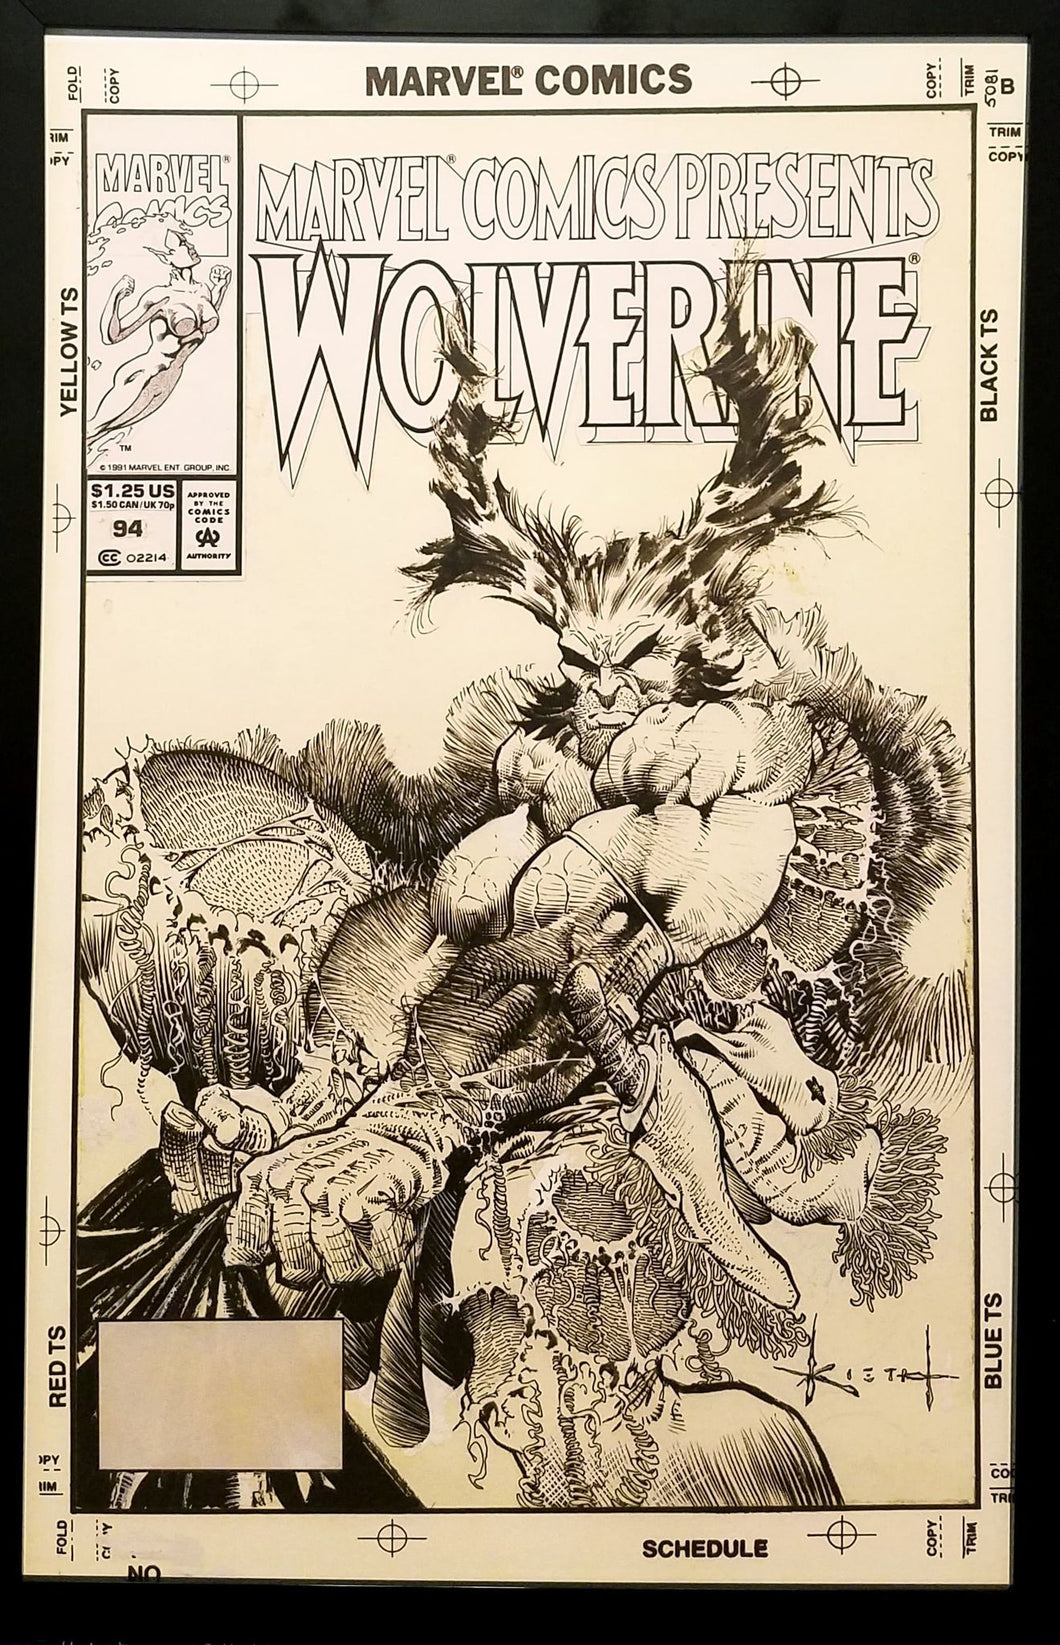 Marvel Comics Presents Wolverine #94 Sam Kieth 11x17 FRAMED Original Art Poster